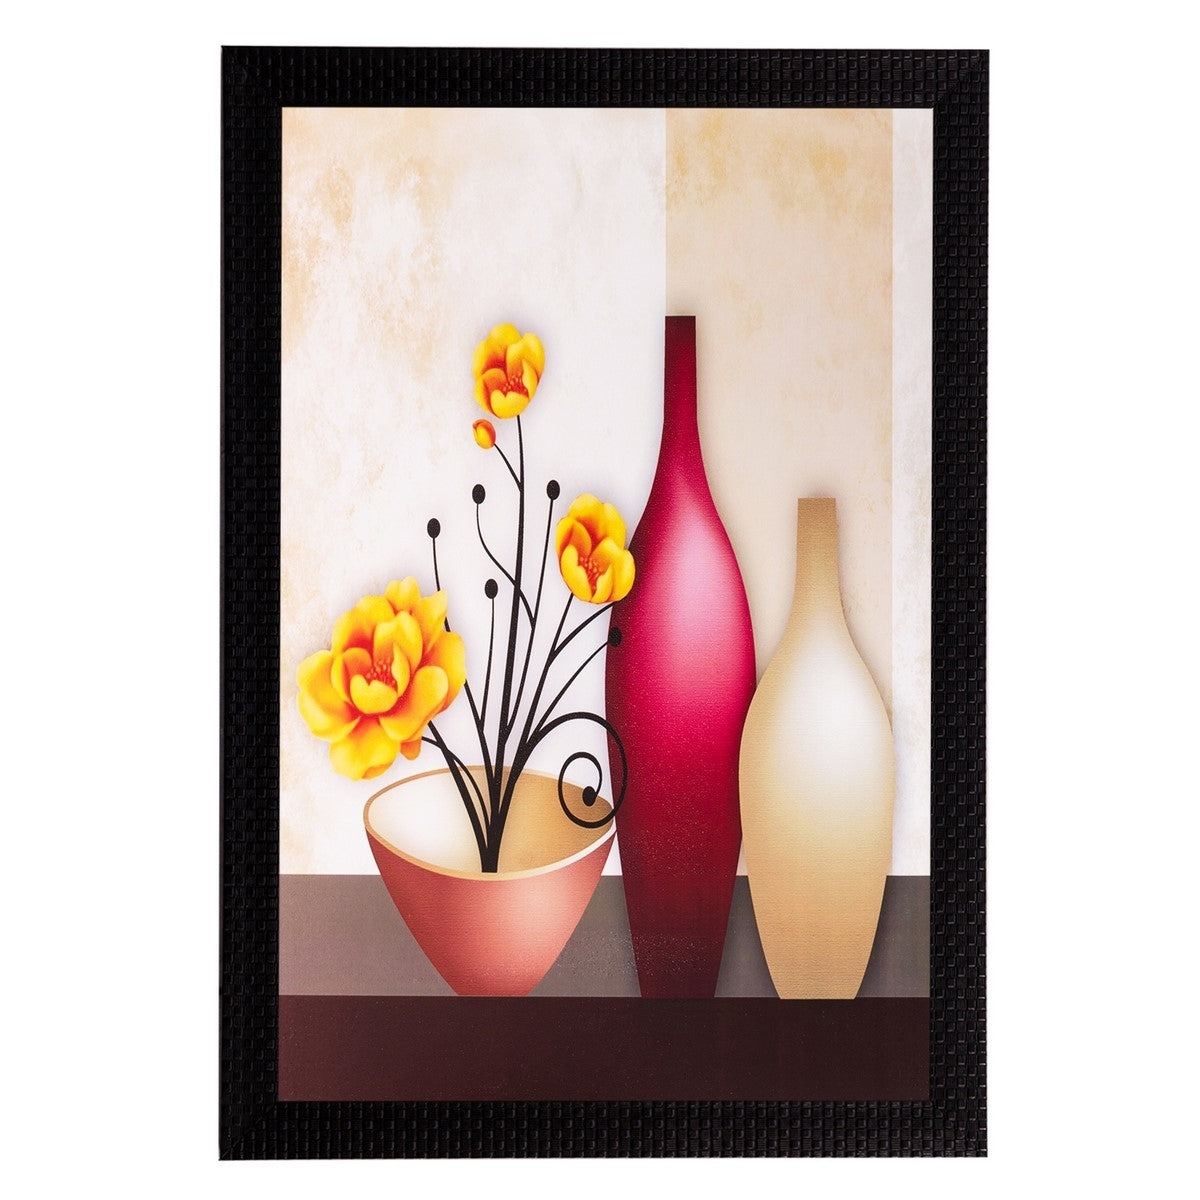 Vases and Flowers Matt Textured UV Art Painting